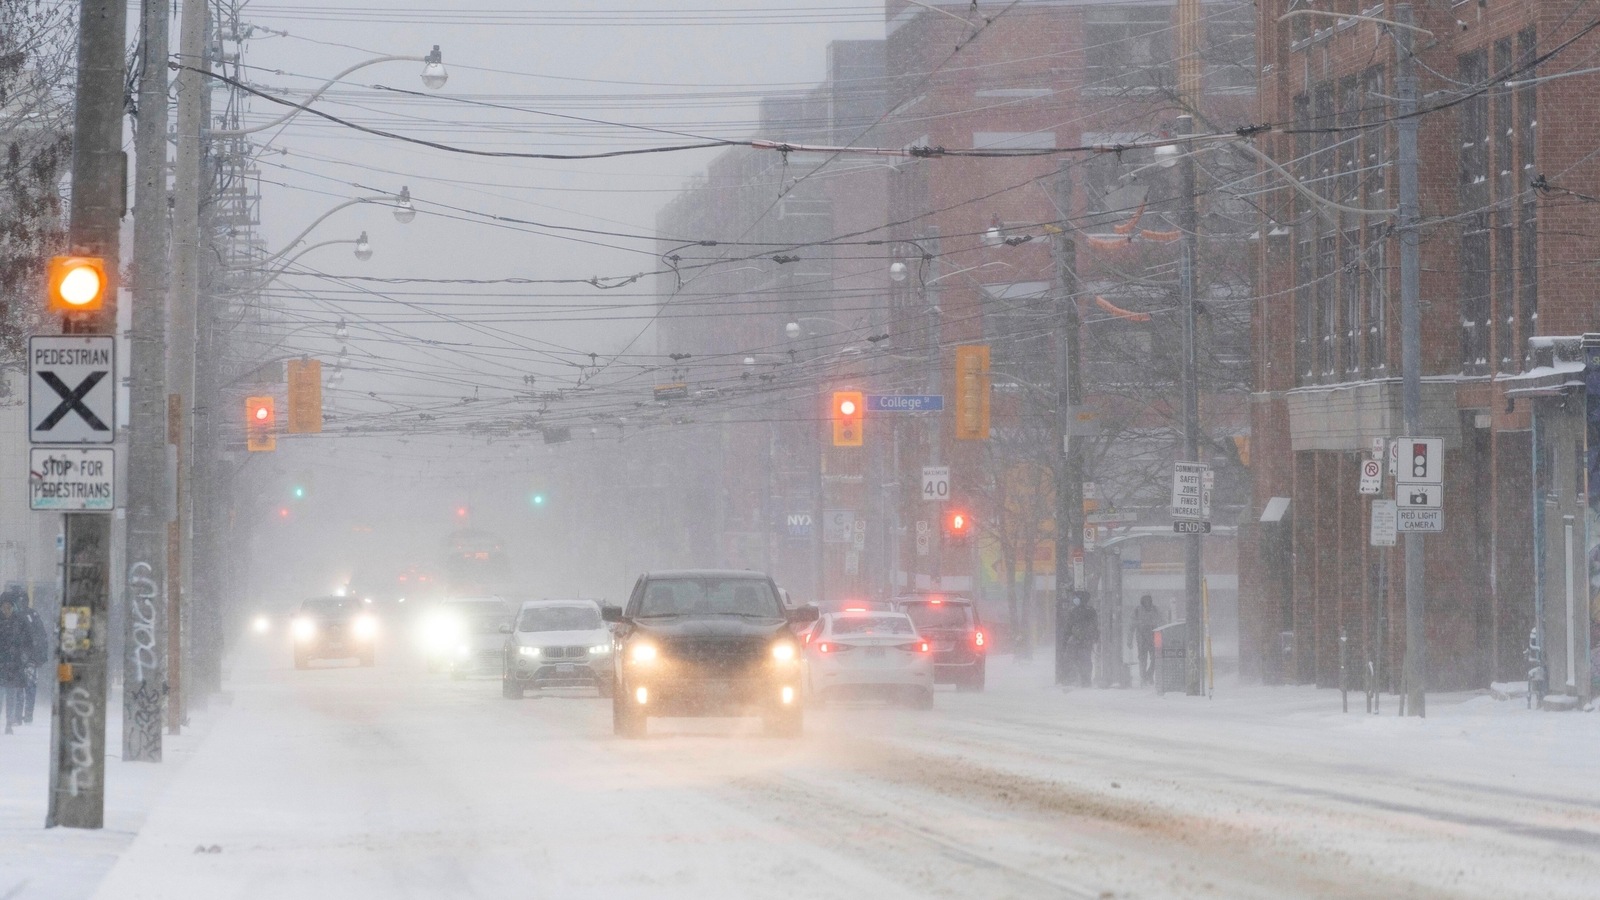 Winter Weather Wreaks Havoc Across Canada - The New York Times